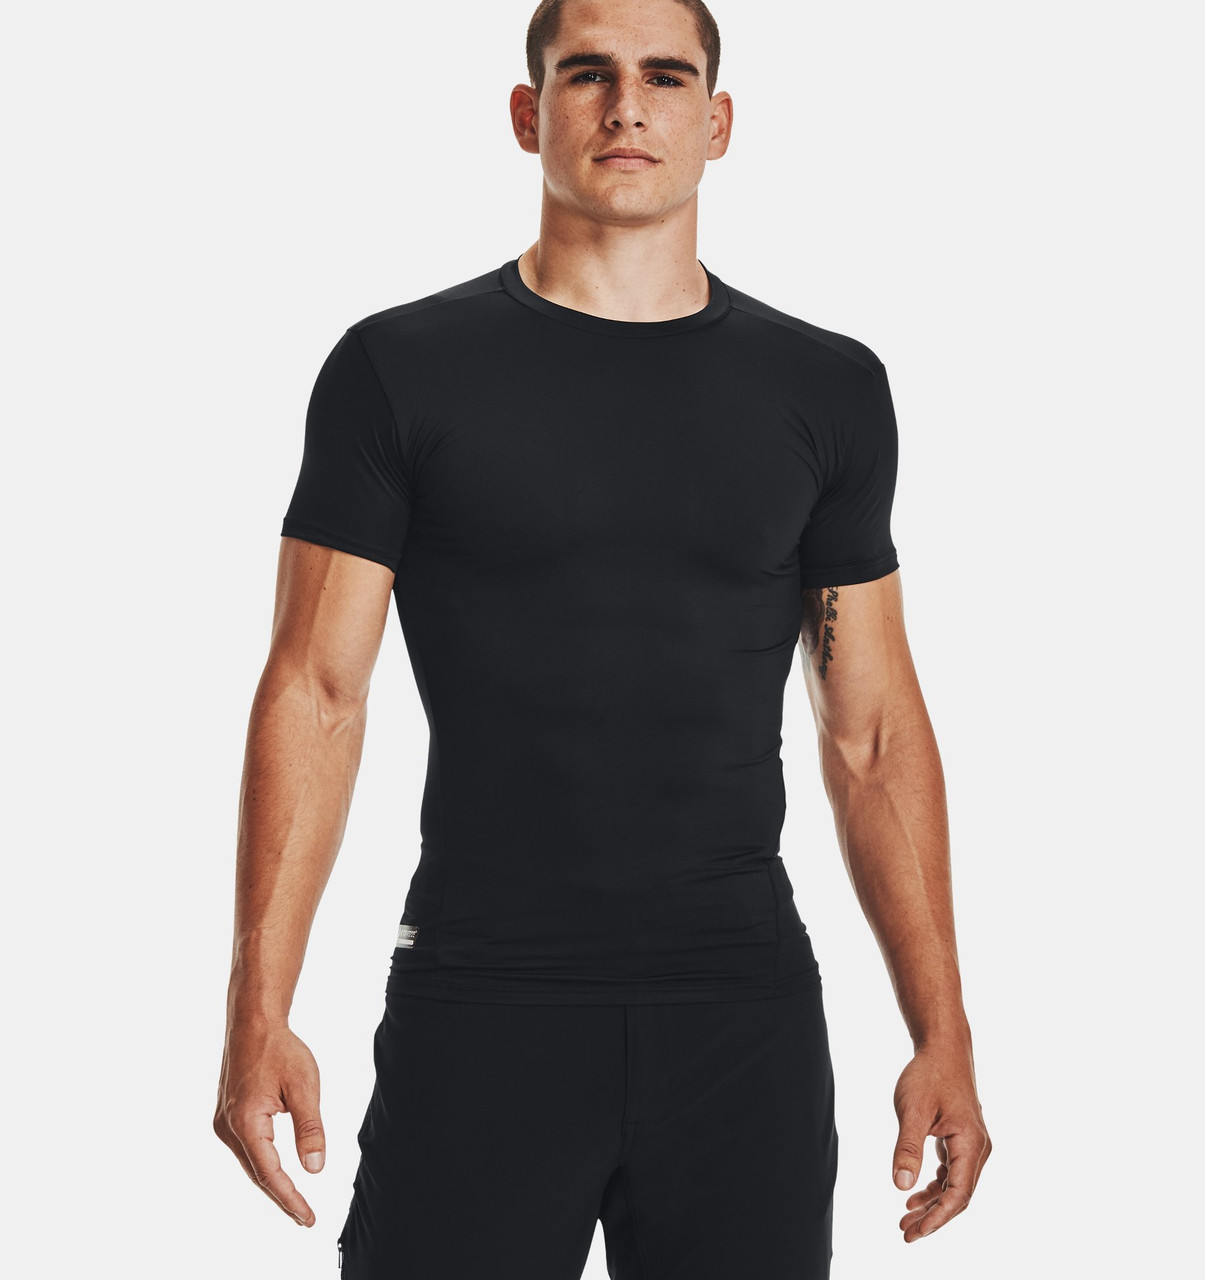 Propper Men's Kinetic Shirt Short Sleeve Shirt, Black, Small